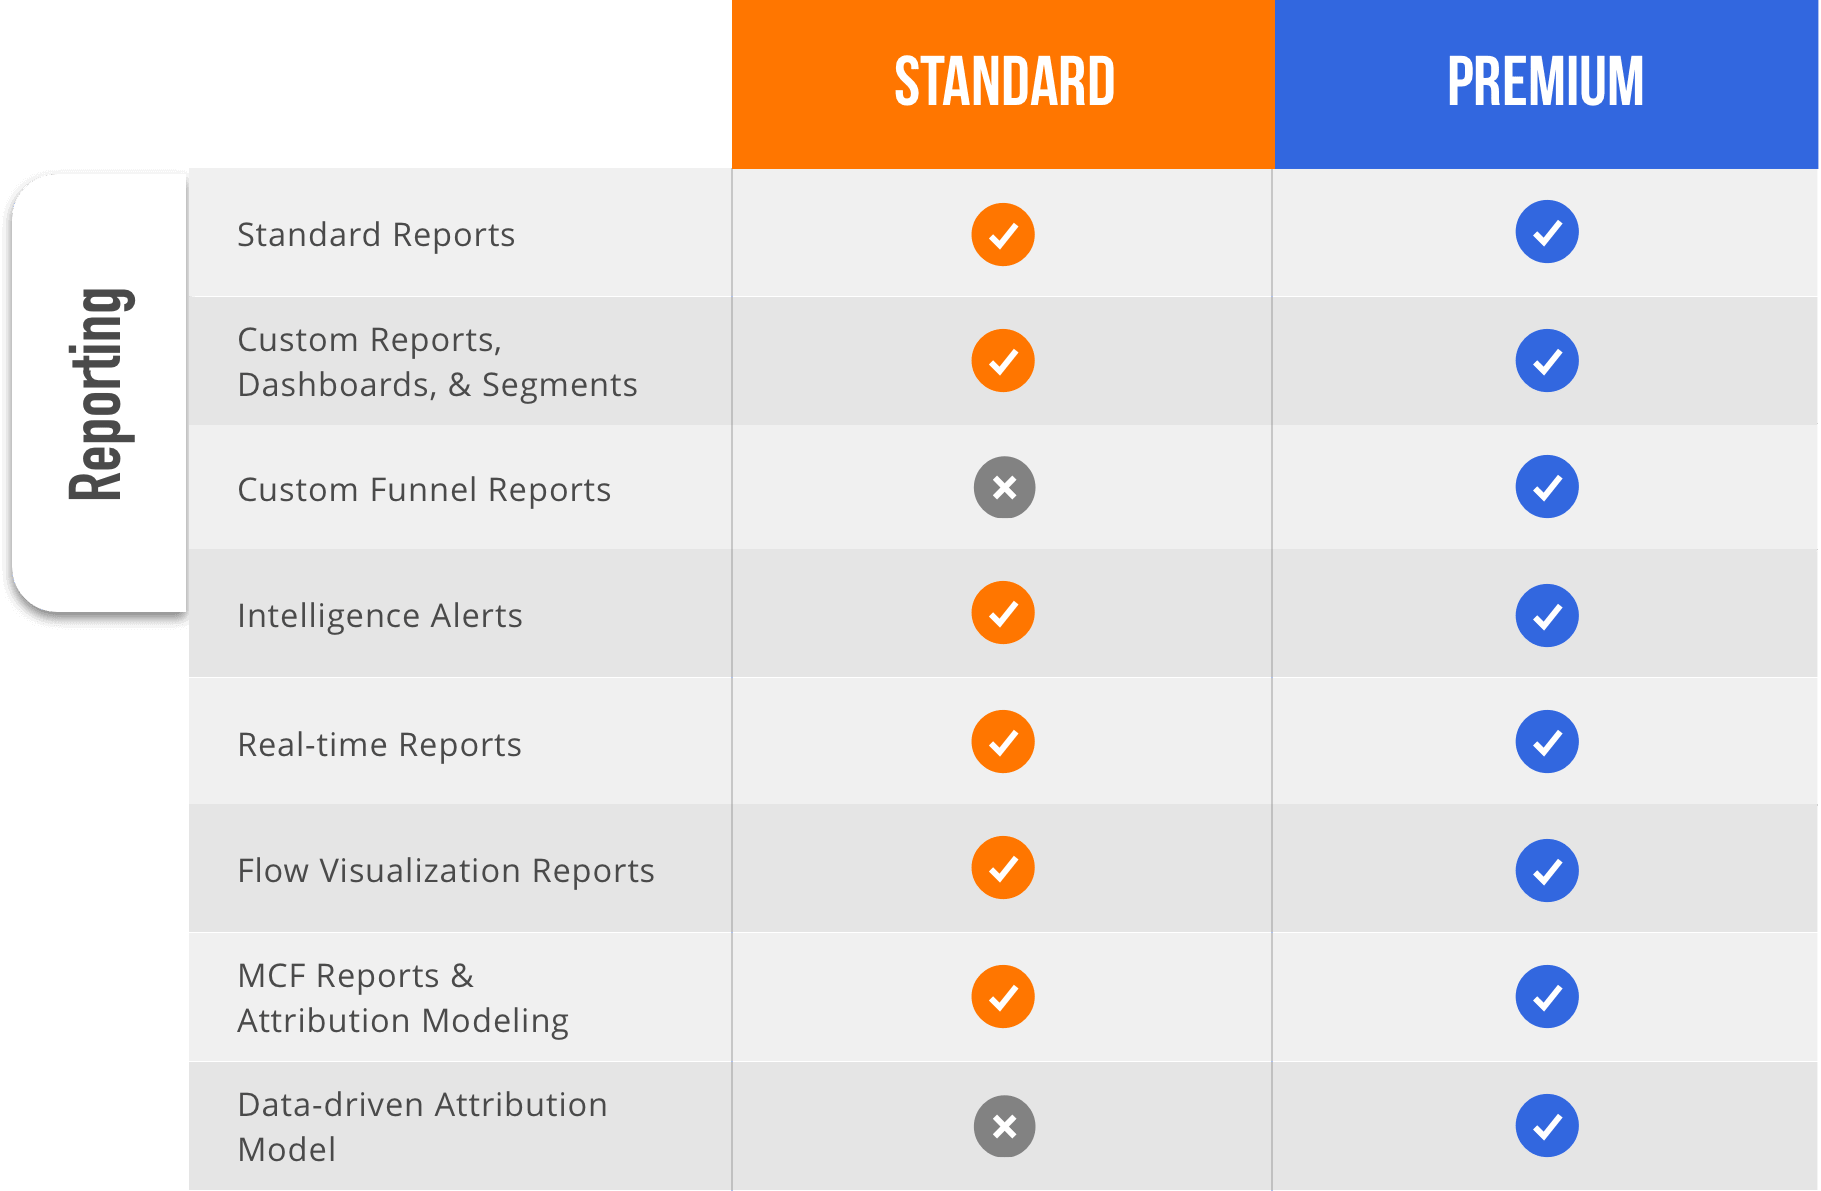 Google Analytics 360 Premium vs Google Analytics Standard Comparison